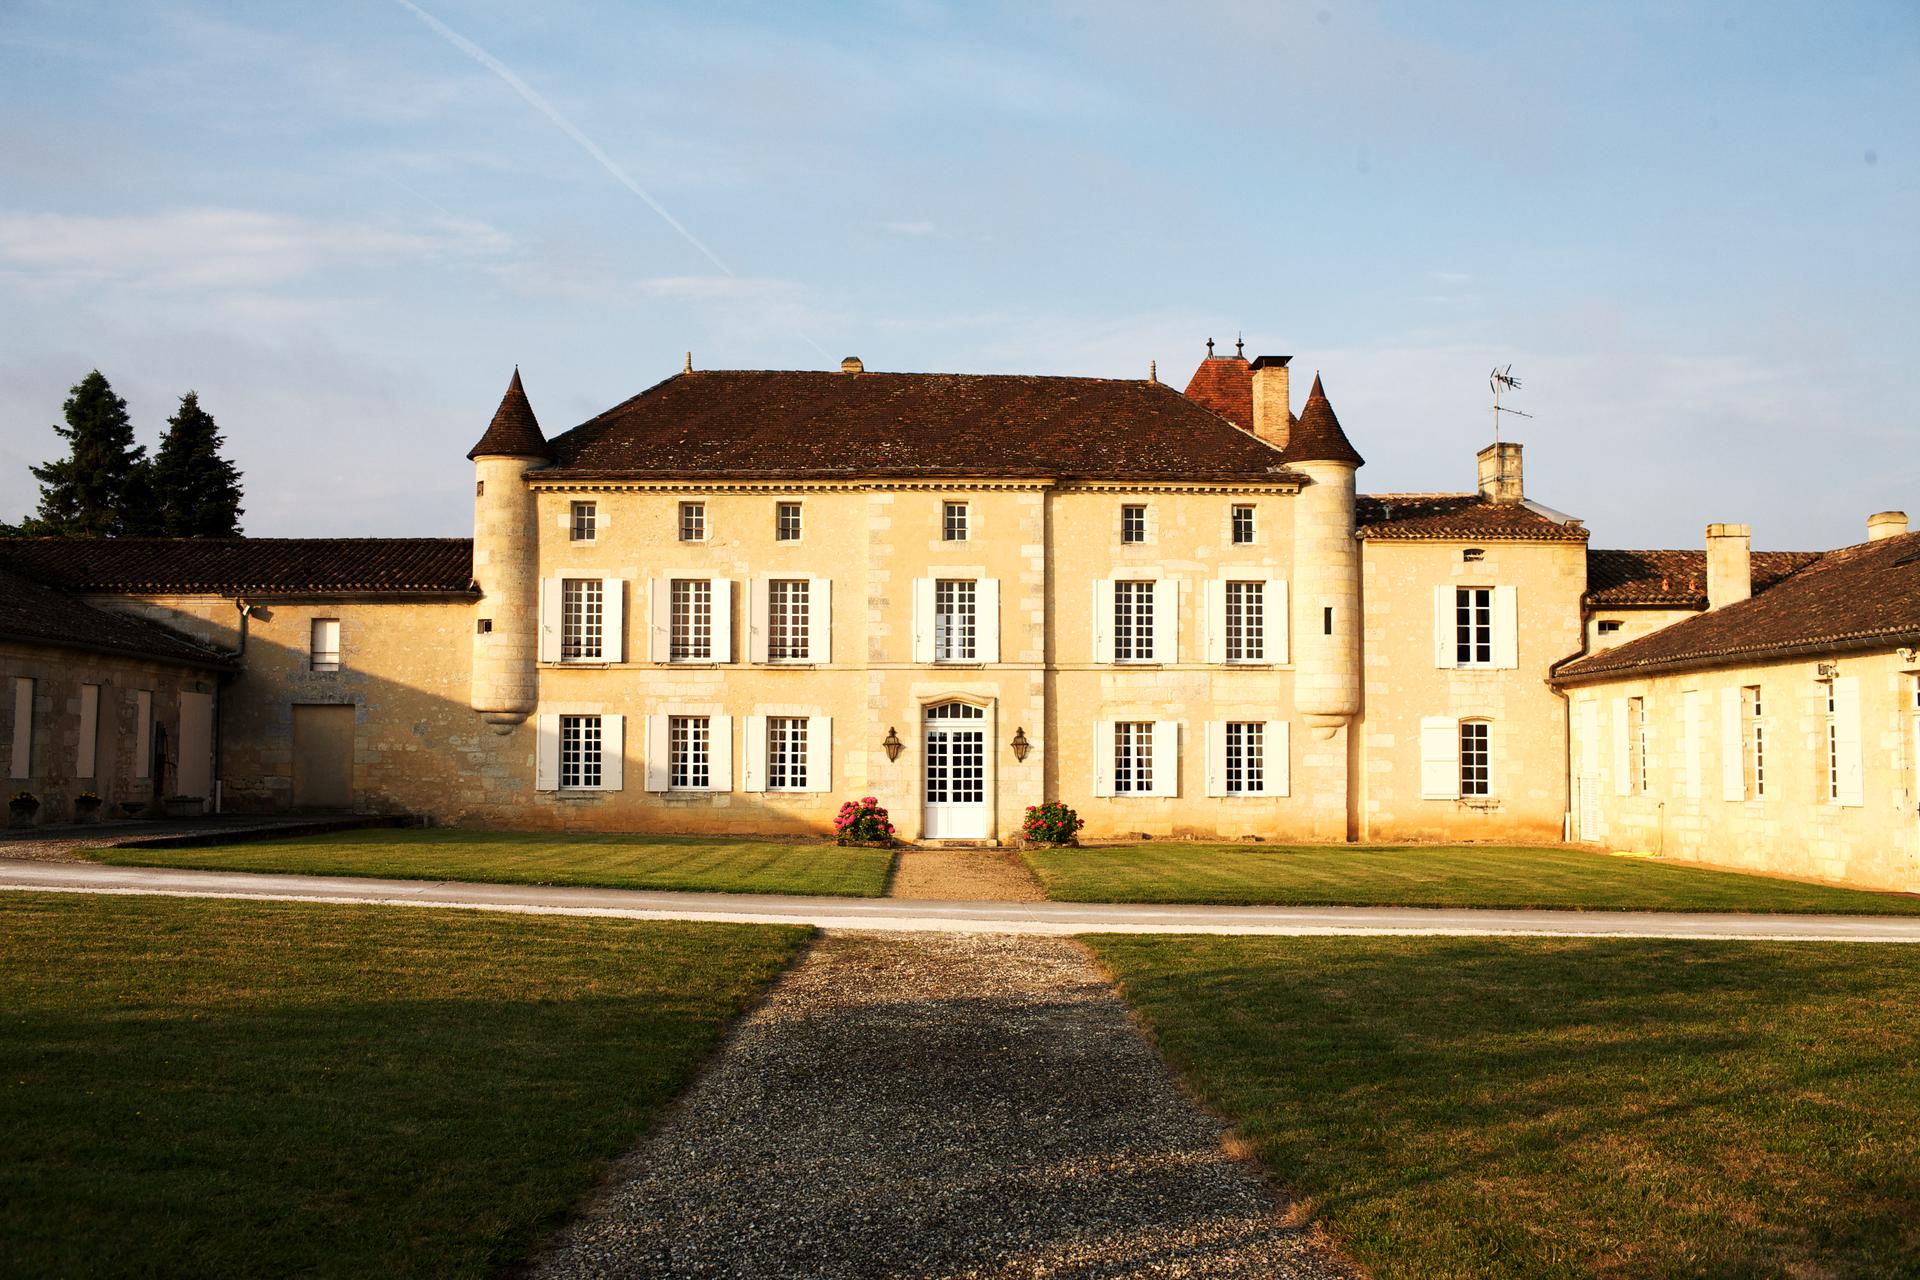 Château Grand Mayne